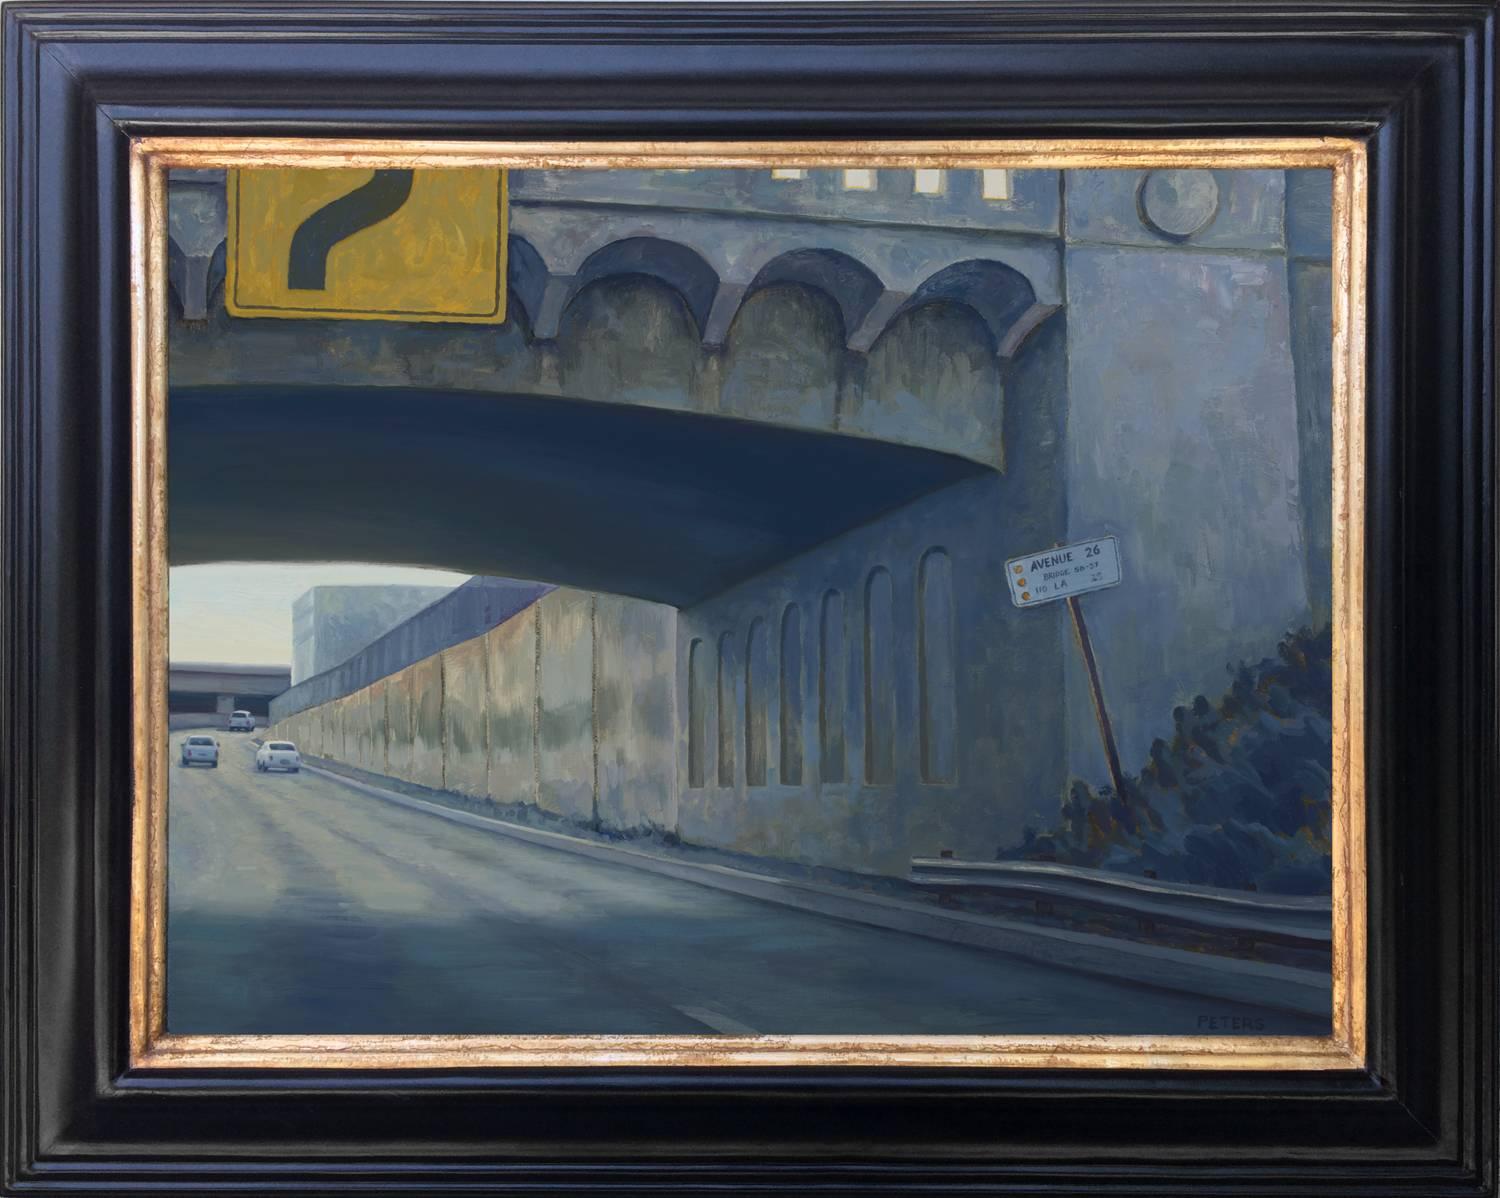 110 Freeway Bridge - Painting by Tony Peters